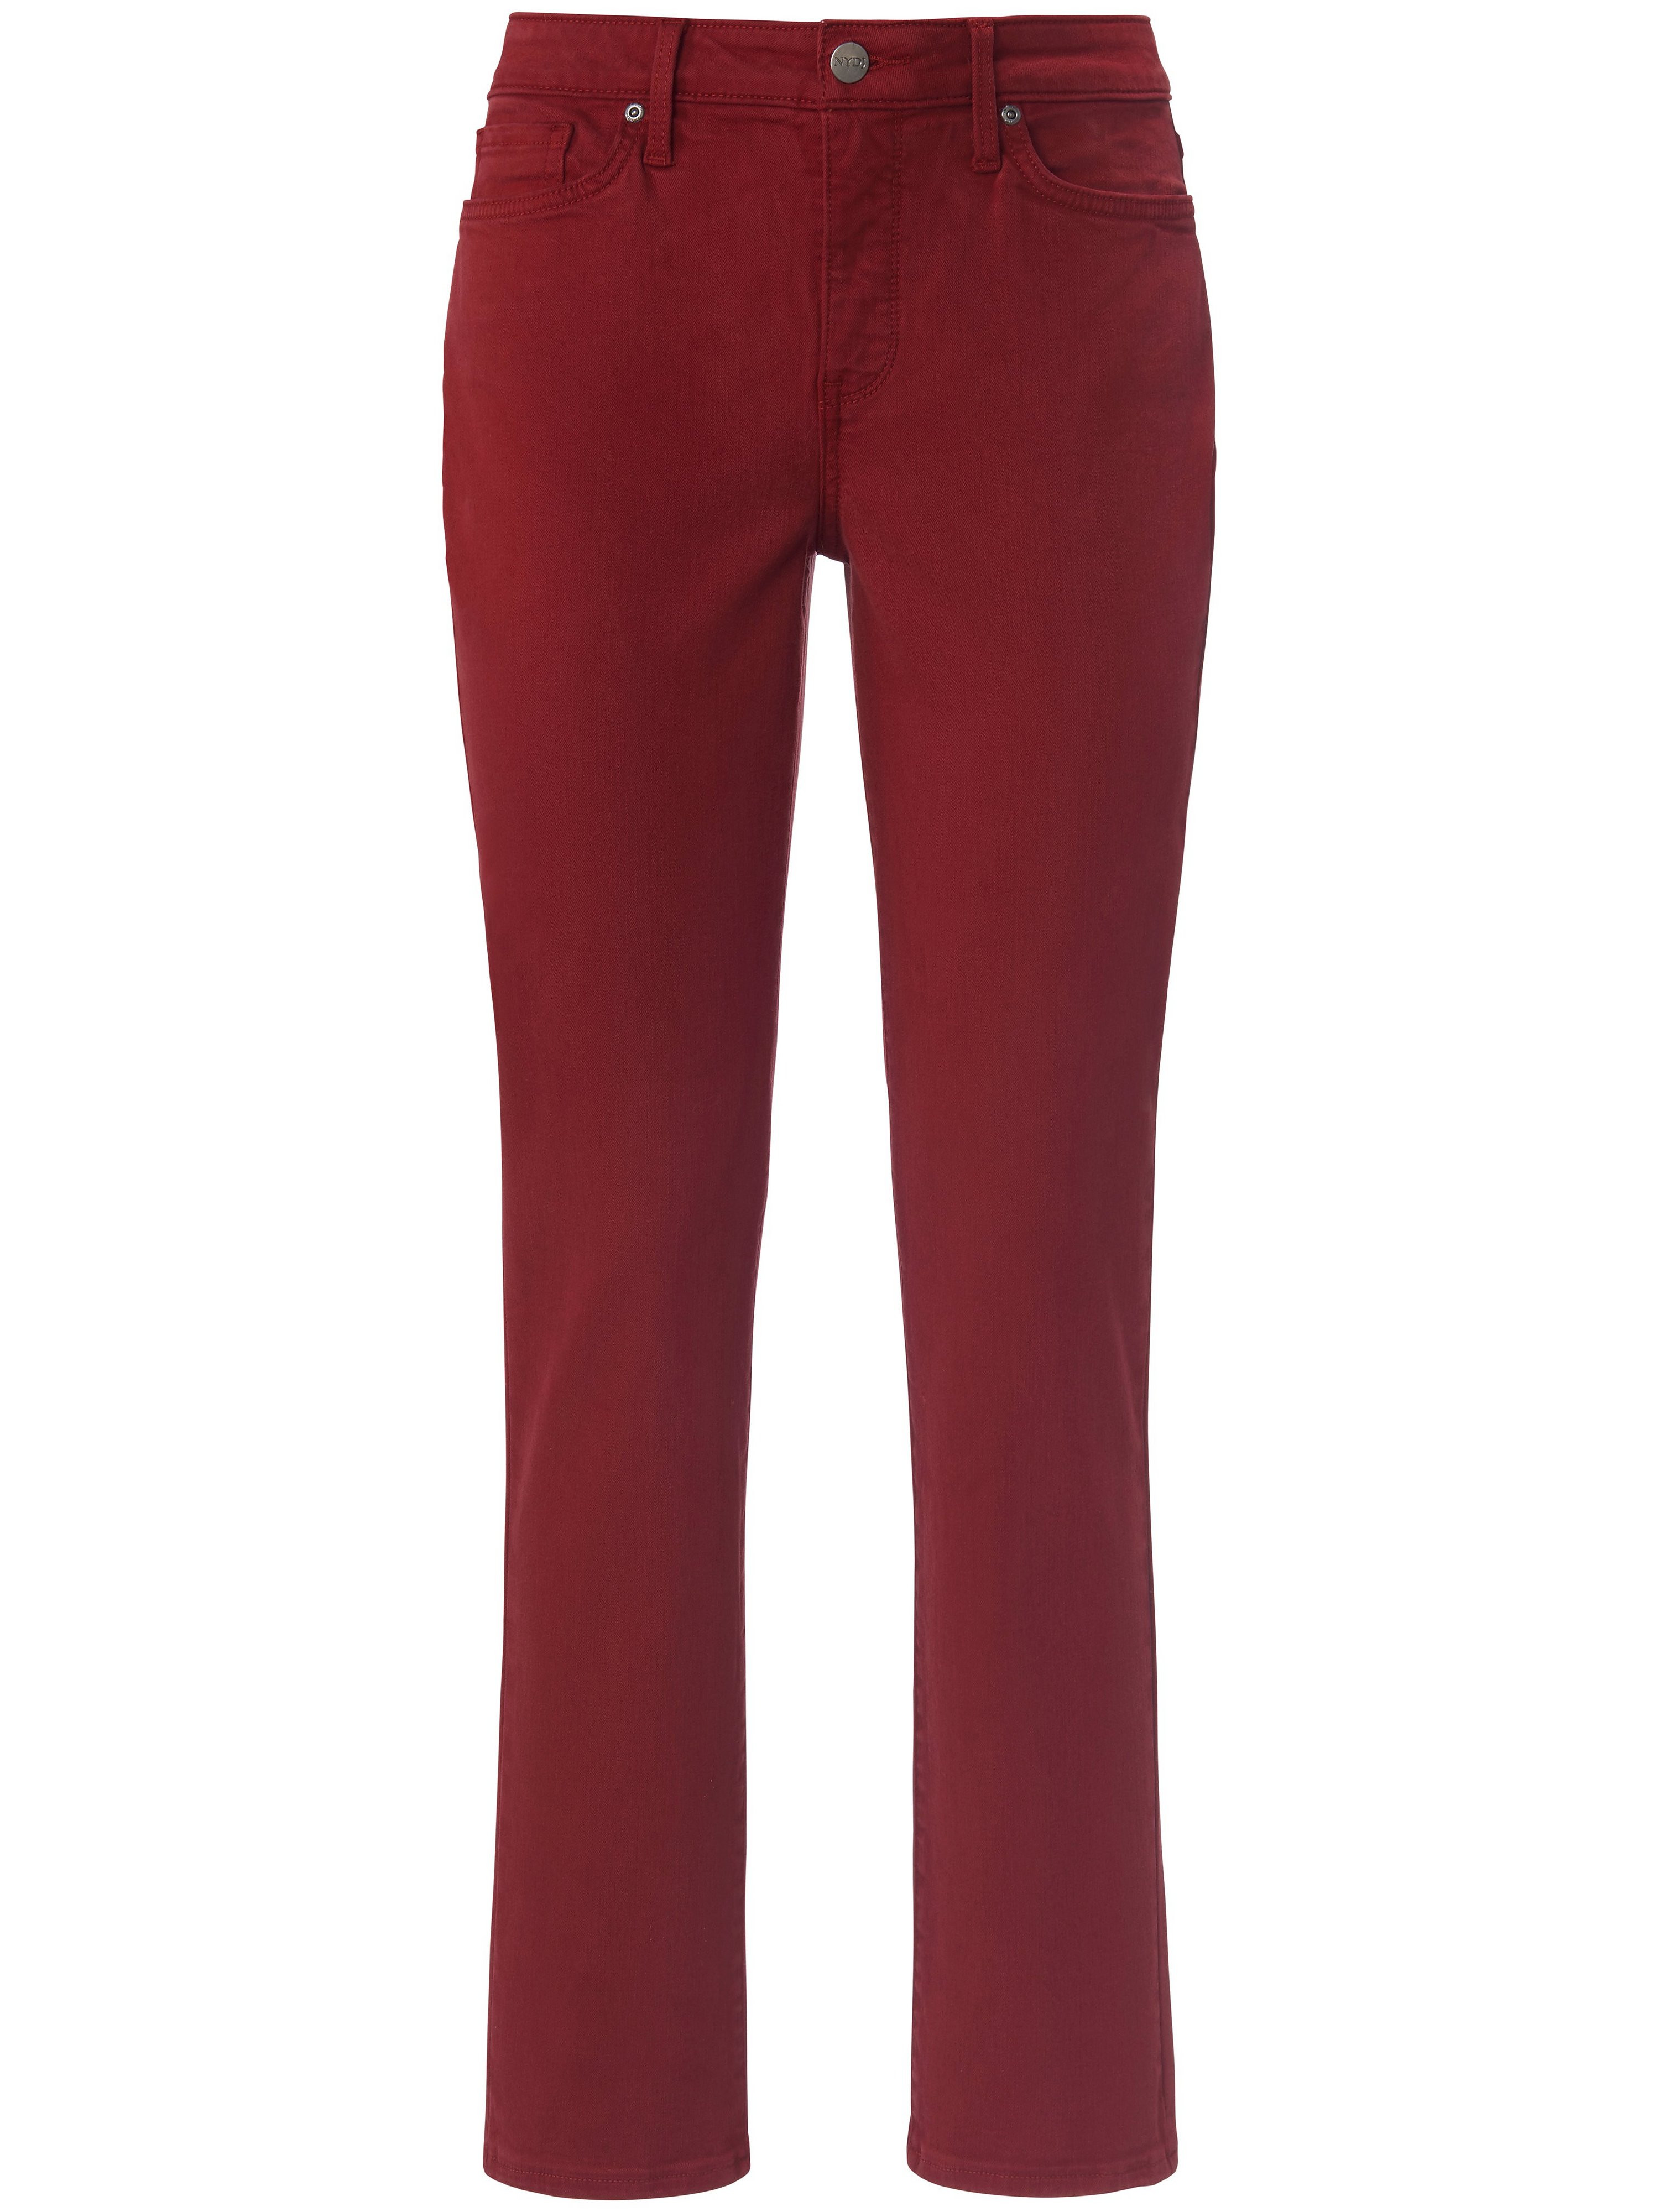 Jeans model Alina Ankle smalle pijpen Van NYDJ rood